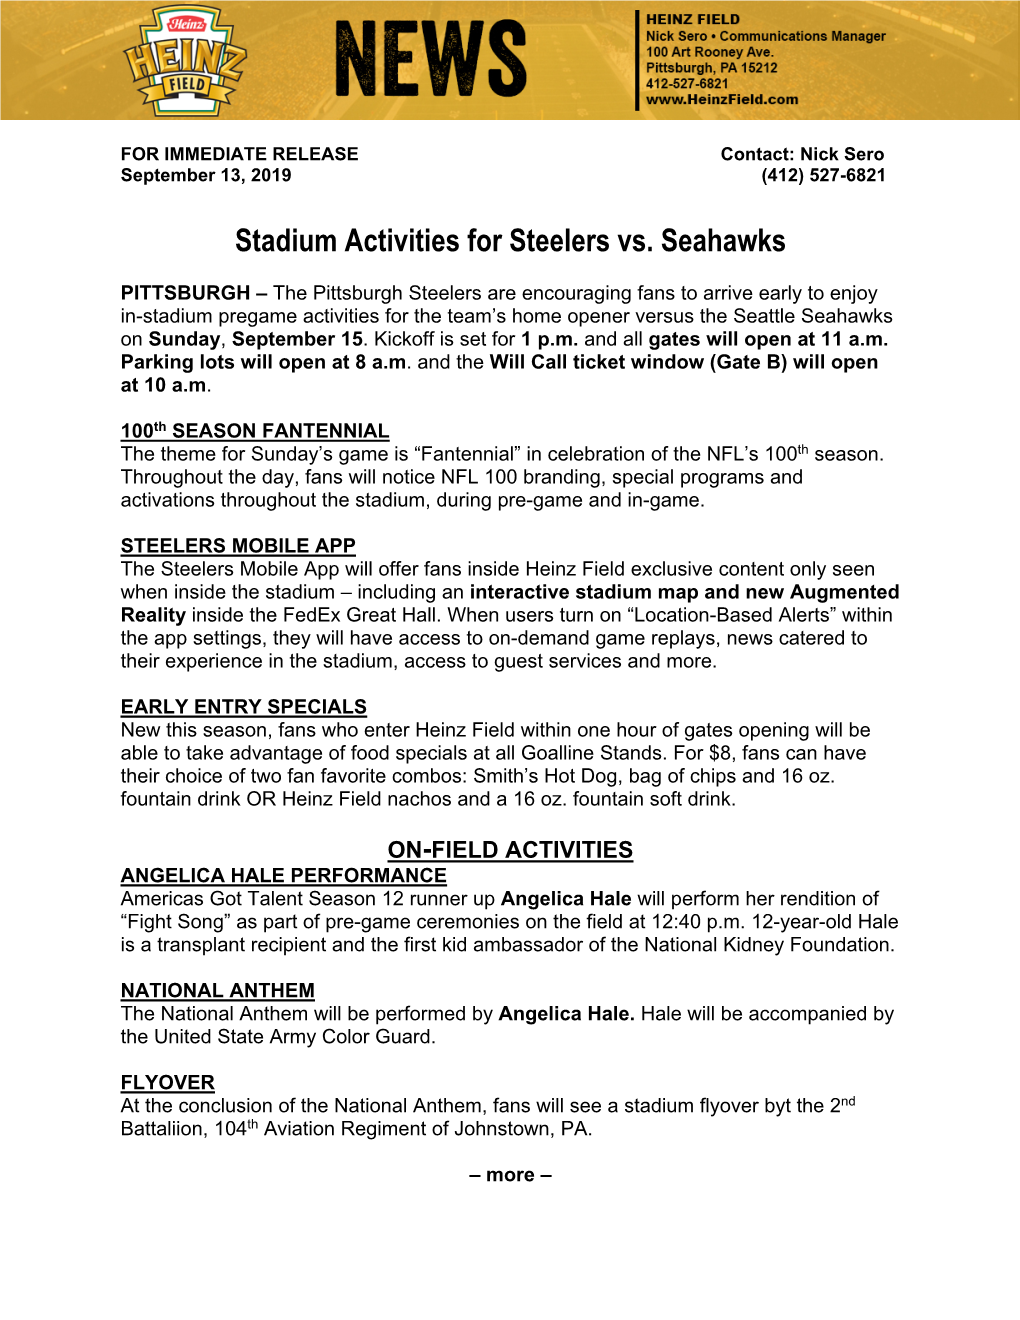 Stadium Activities for Steelers Vs. Seahawks